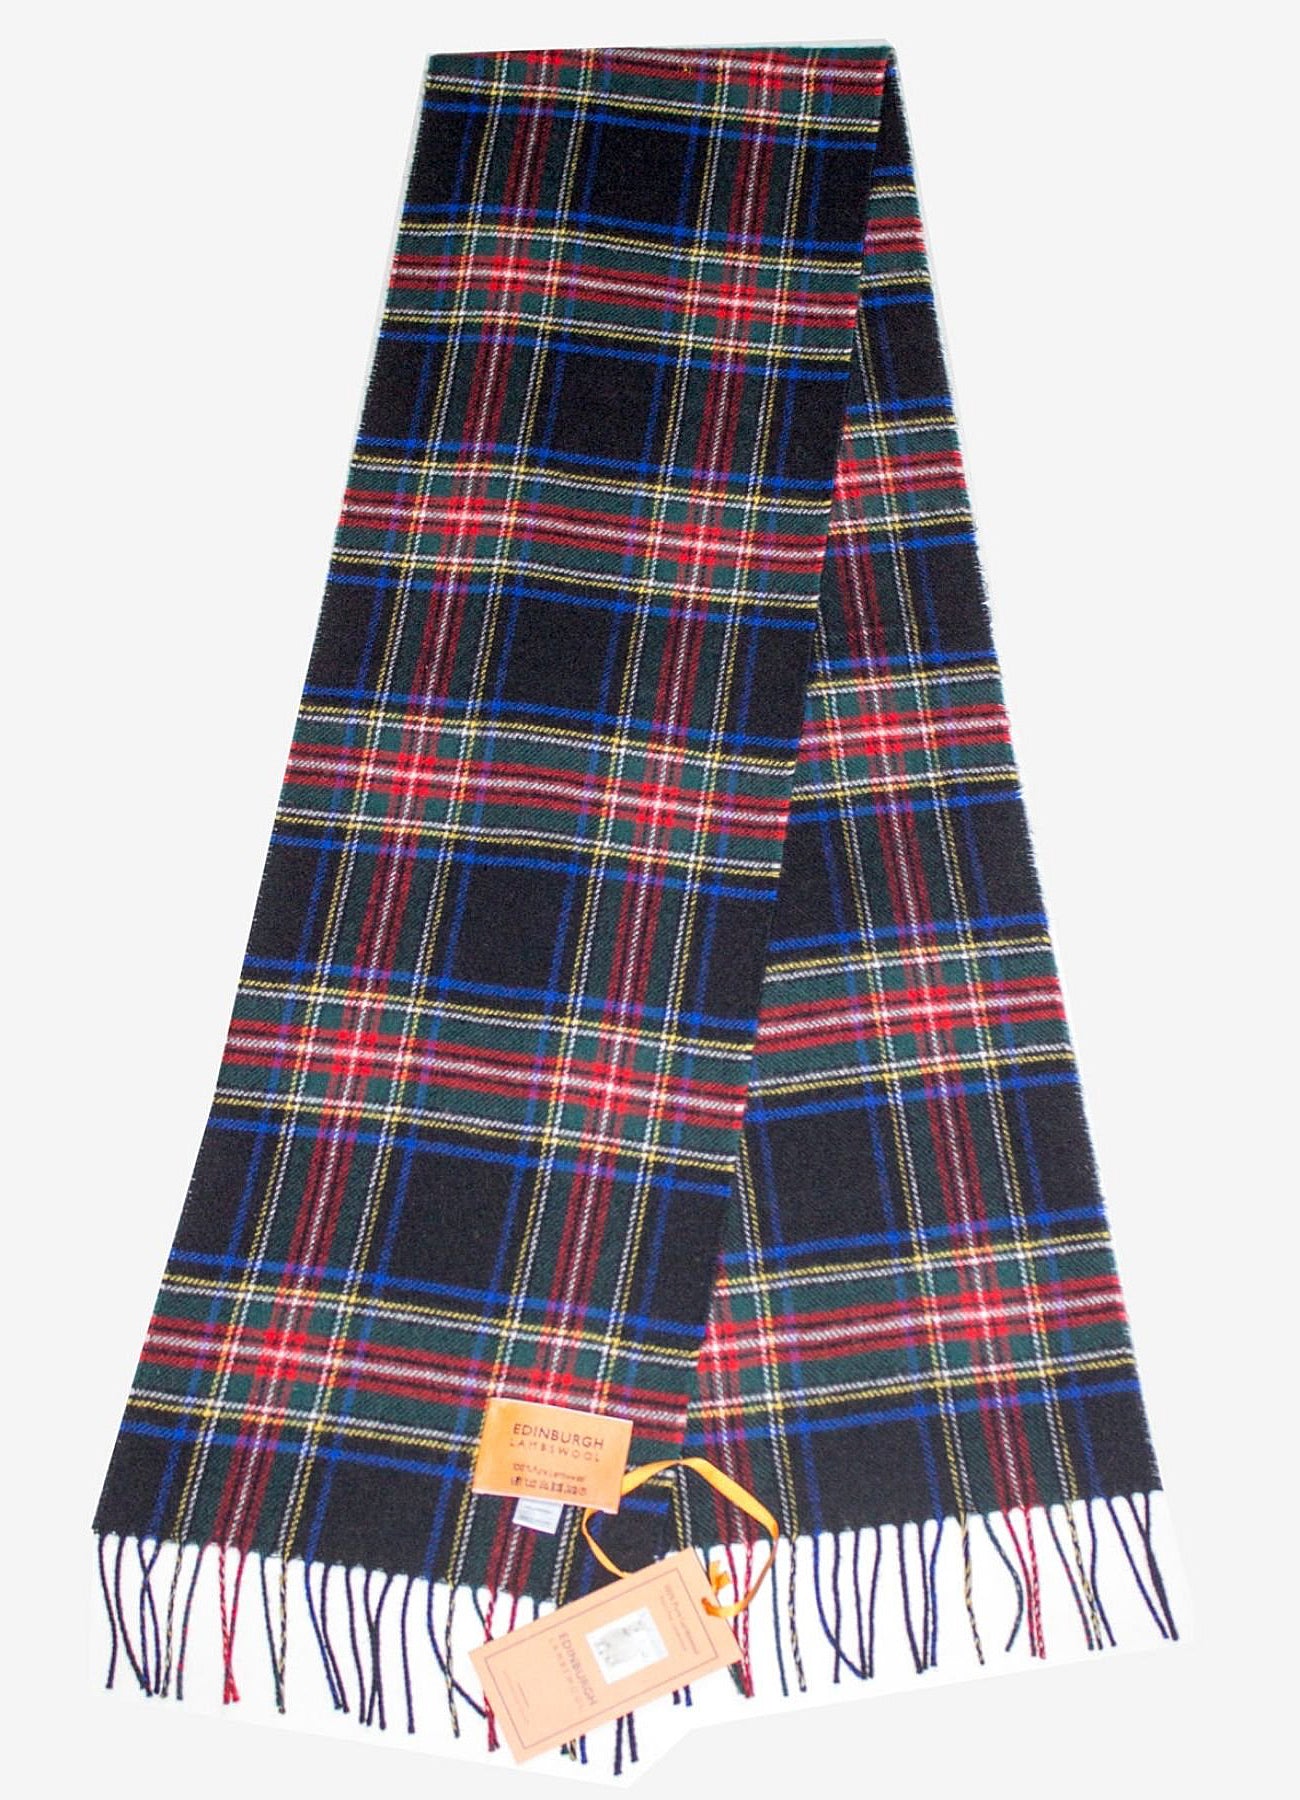 Stewart Black - Made in Scotland Scarf 100% Pure Cashmere